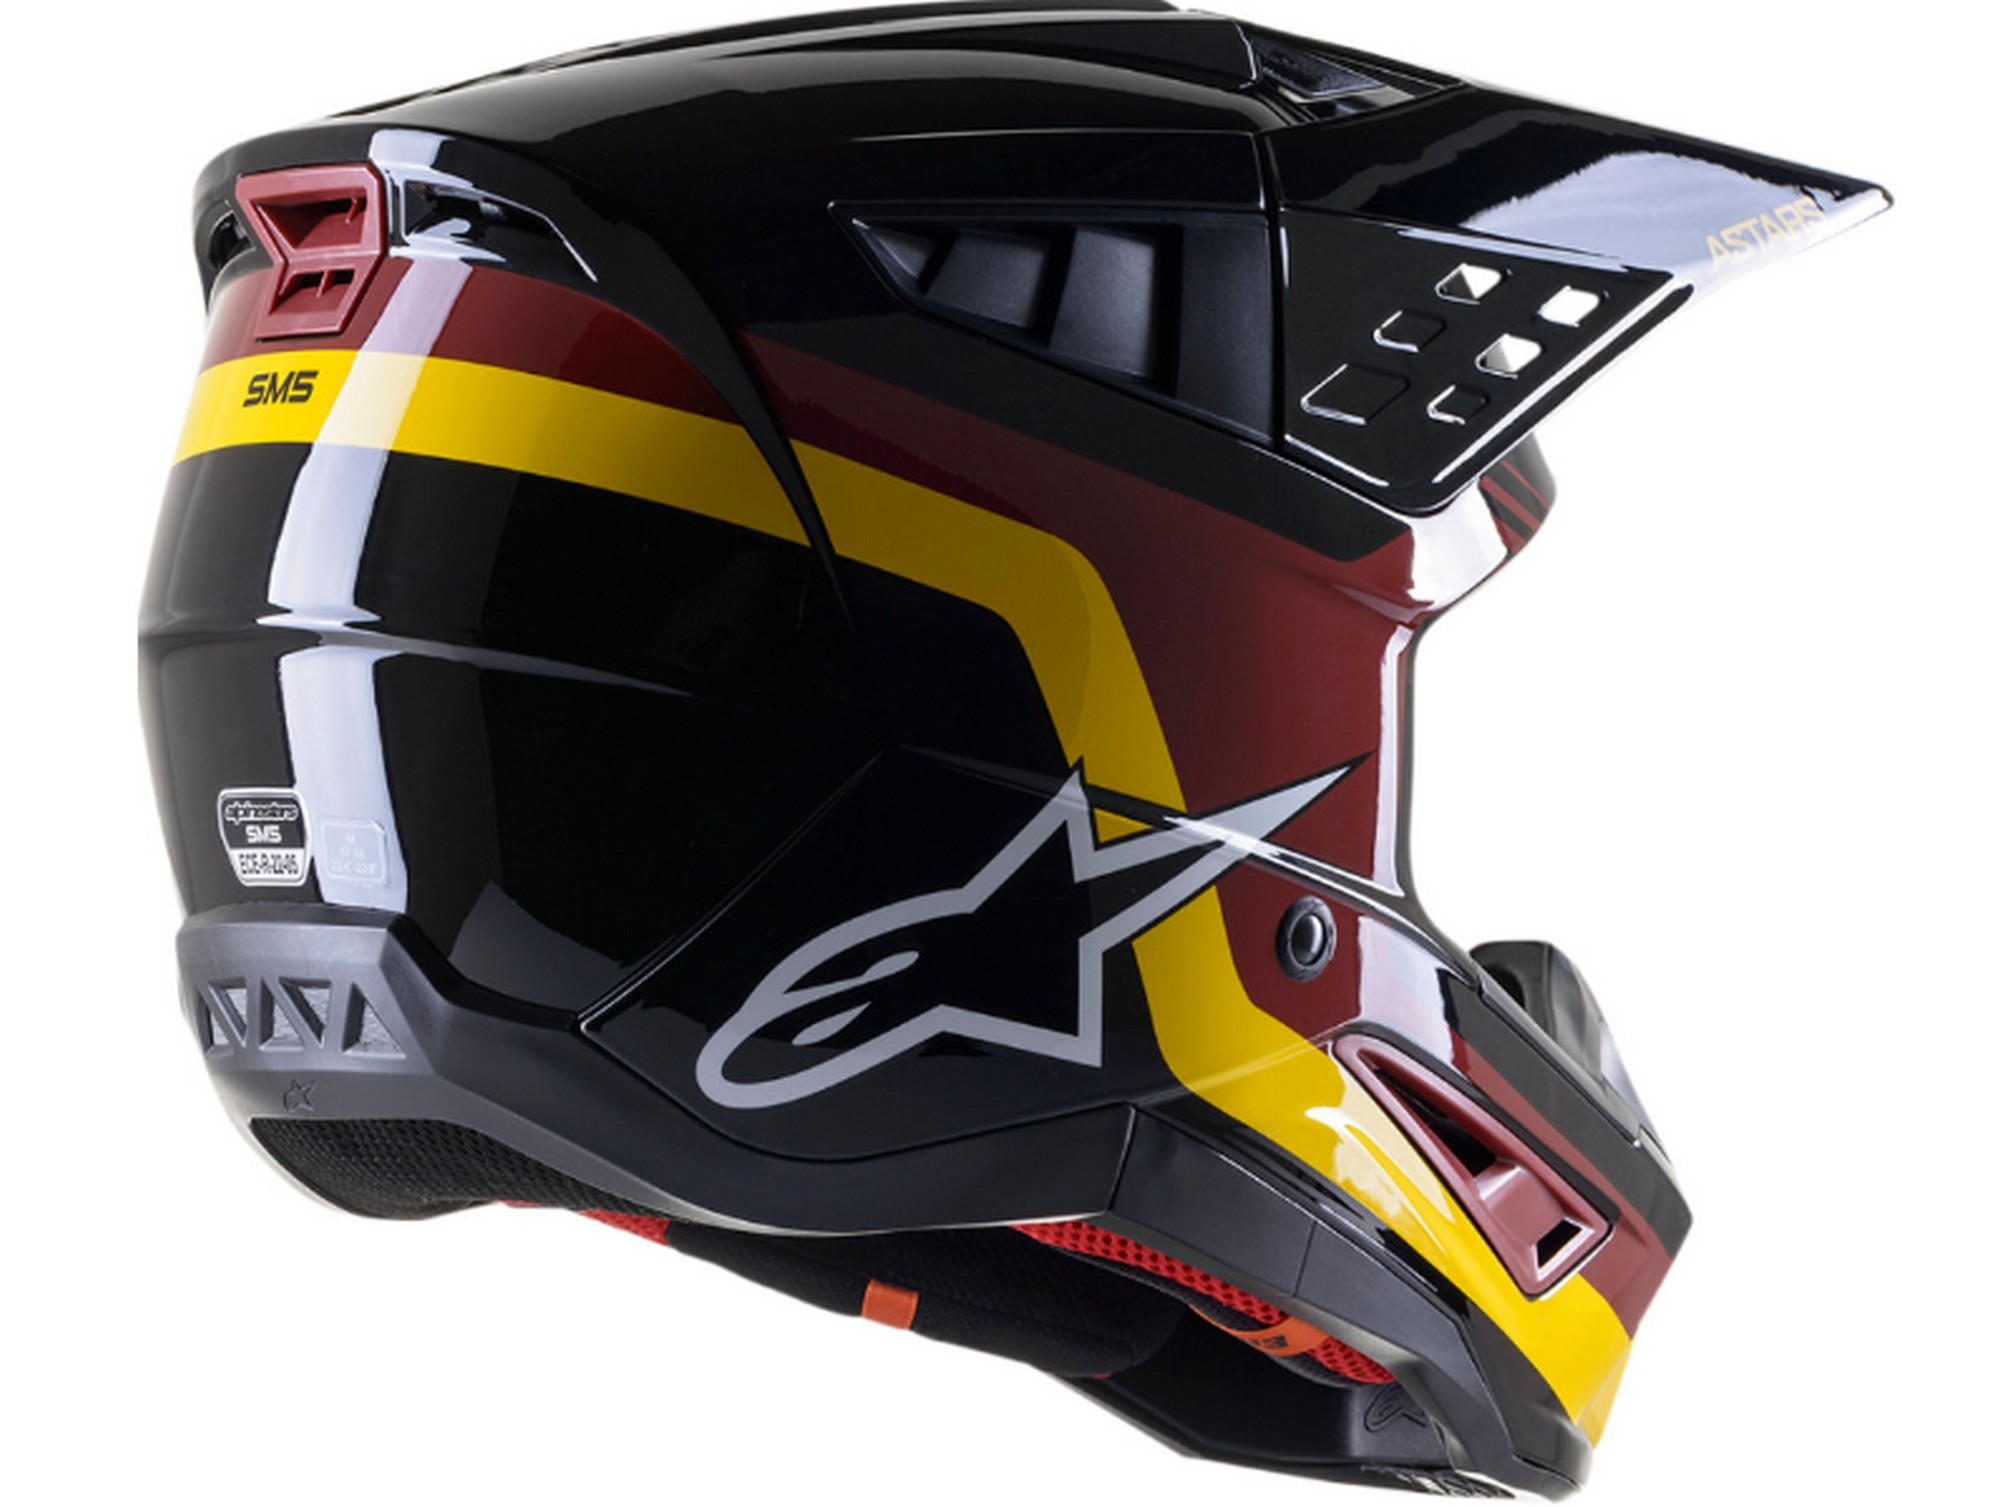 Viewing Images For Alpinestars SM5 Venture Helmet :: MotorcycleGear.com